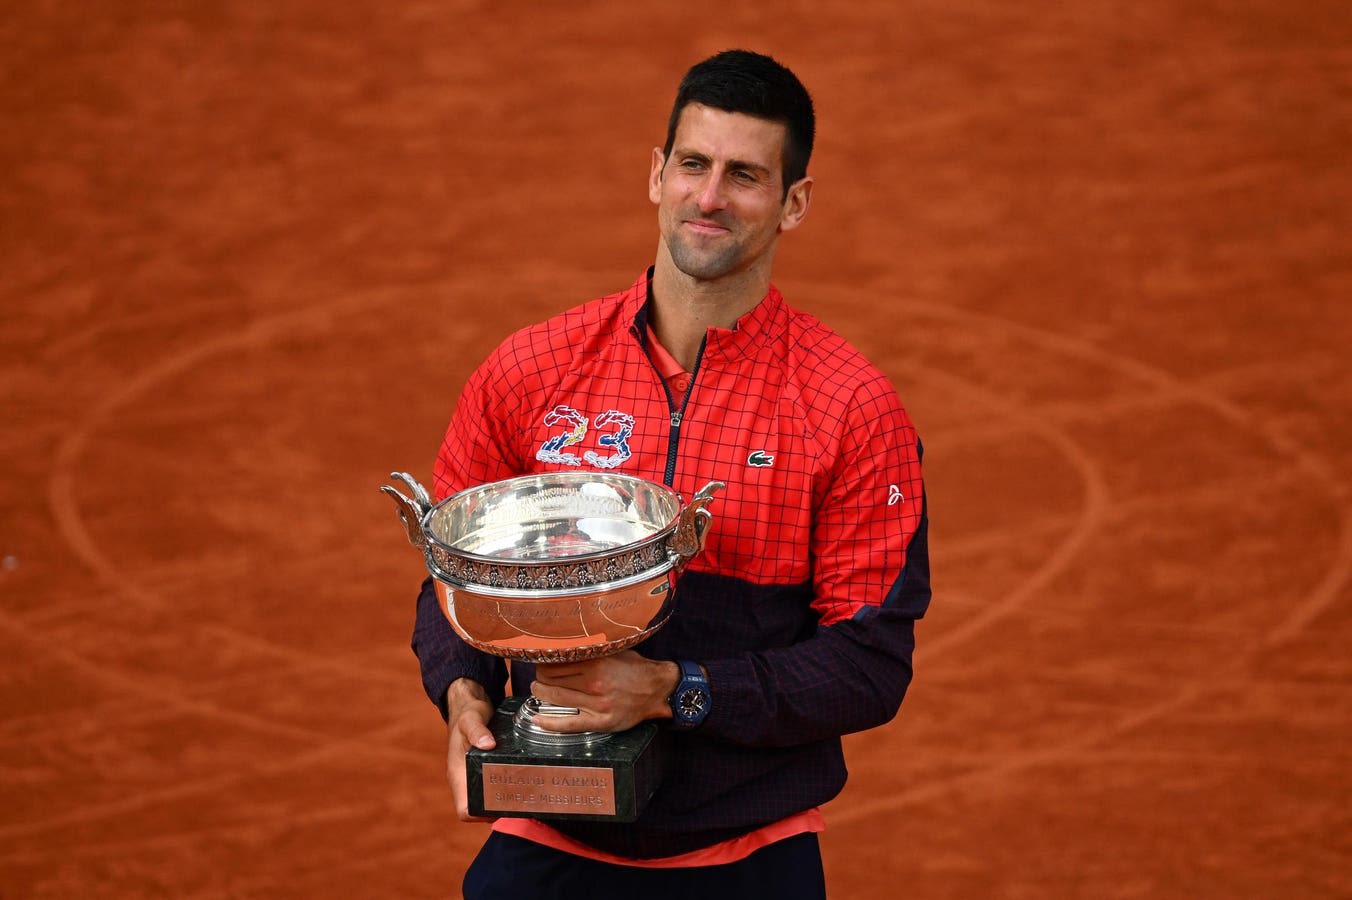 Carlos Alcaraz, Novak Djokovic Top List Of French Open Favorites, Rafa Nadal 7th Favorite